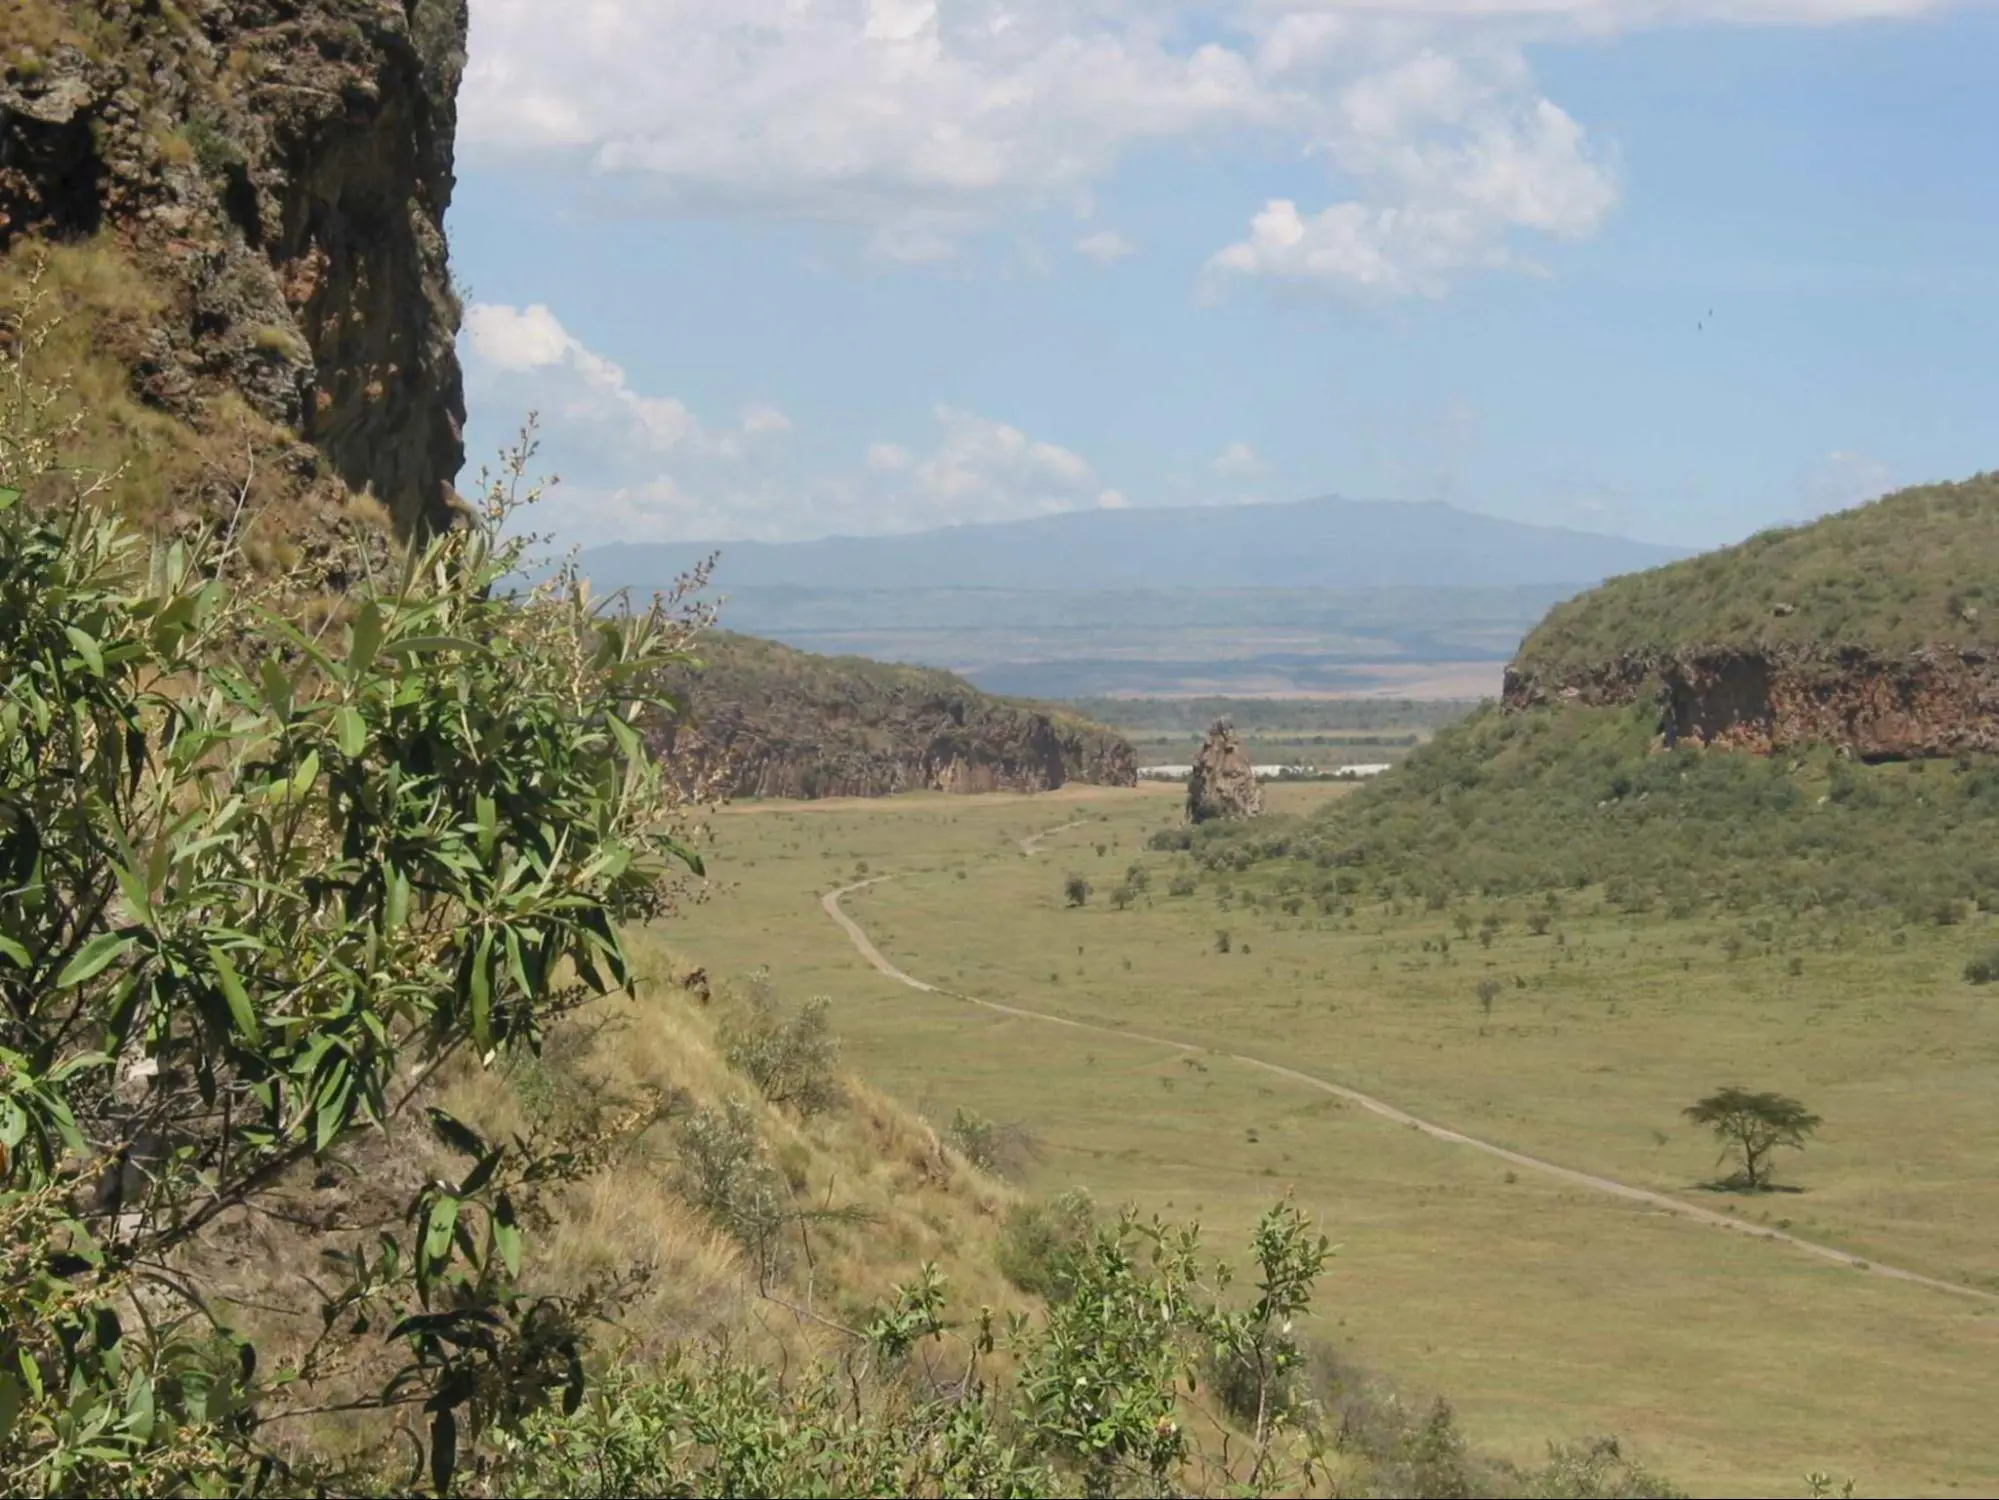 Scenery in Kenya - Hell’s Gate National Park